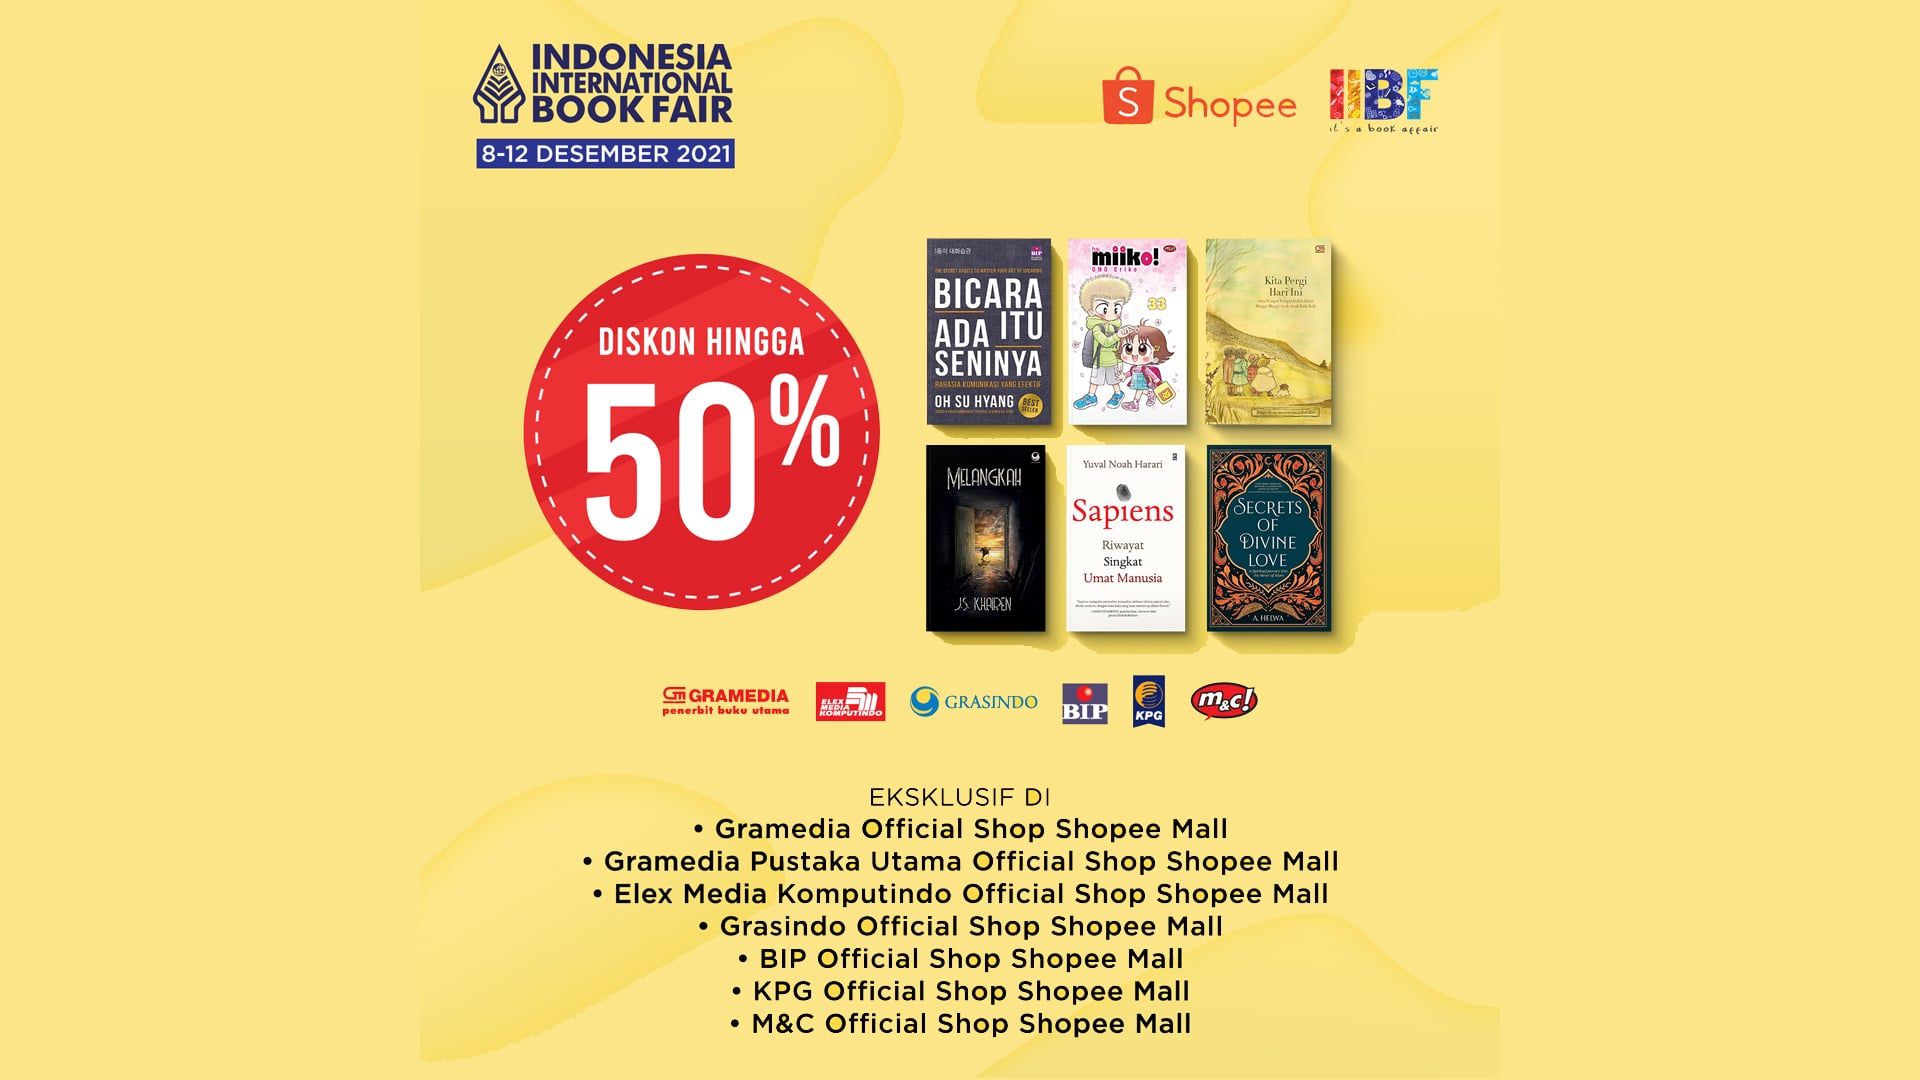 Gramedia Hadirkan 24 Penulis dan Diskon Spesial Hingga 50% di Indonesia International Book Fair 2021